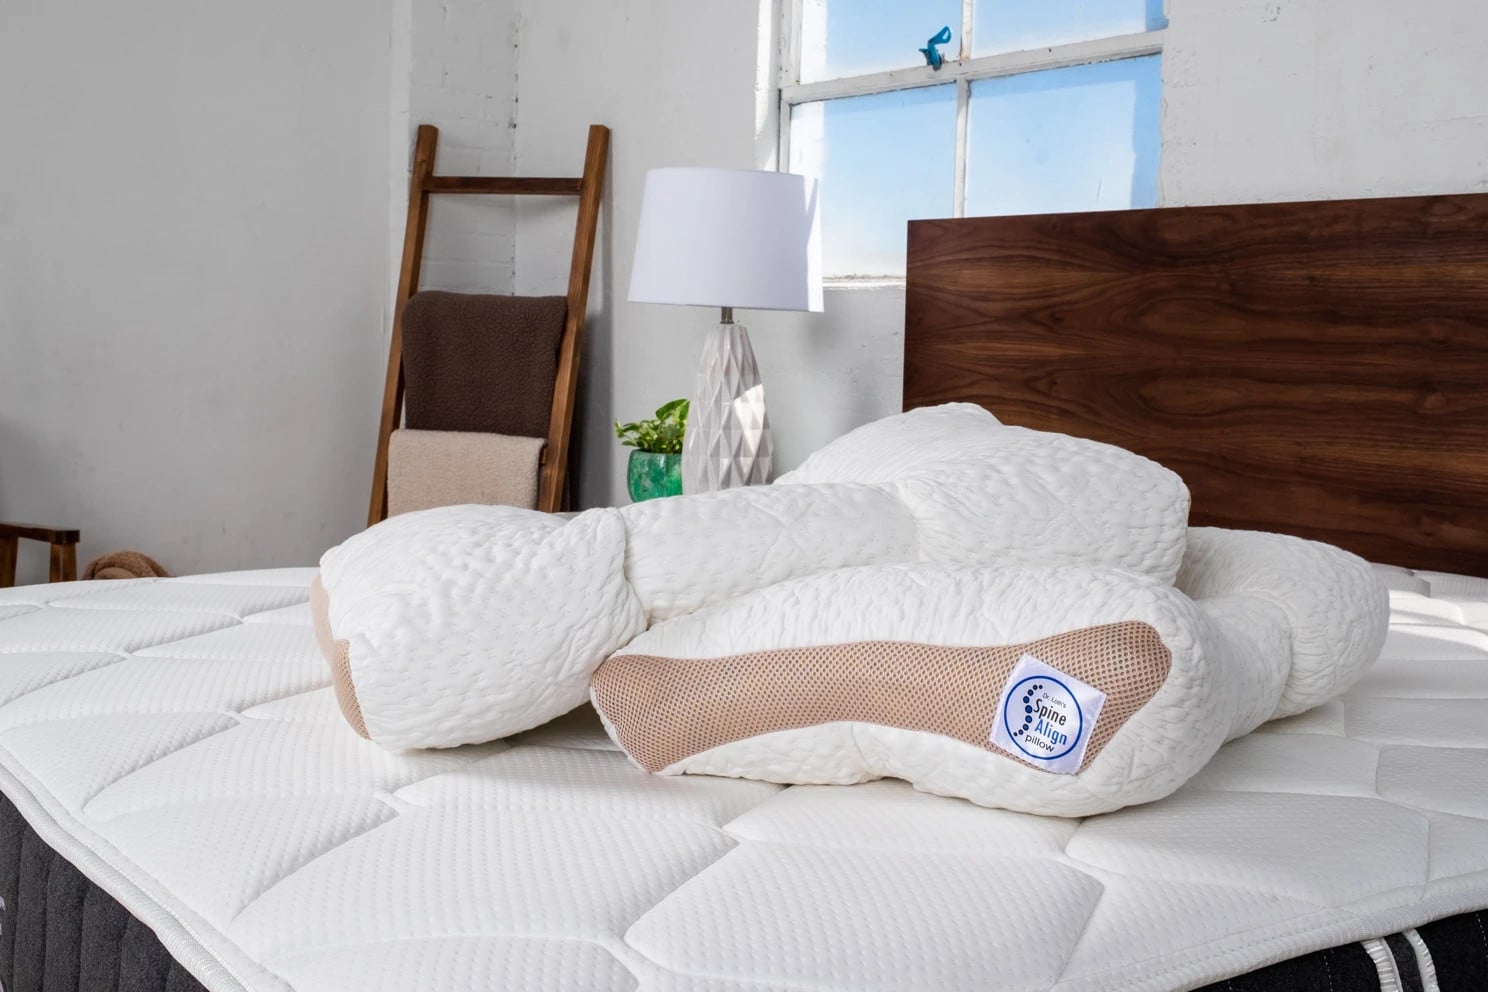 SpineAlign Pillow Review (2024) - Mattress Clarity